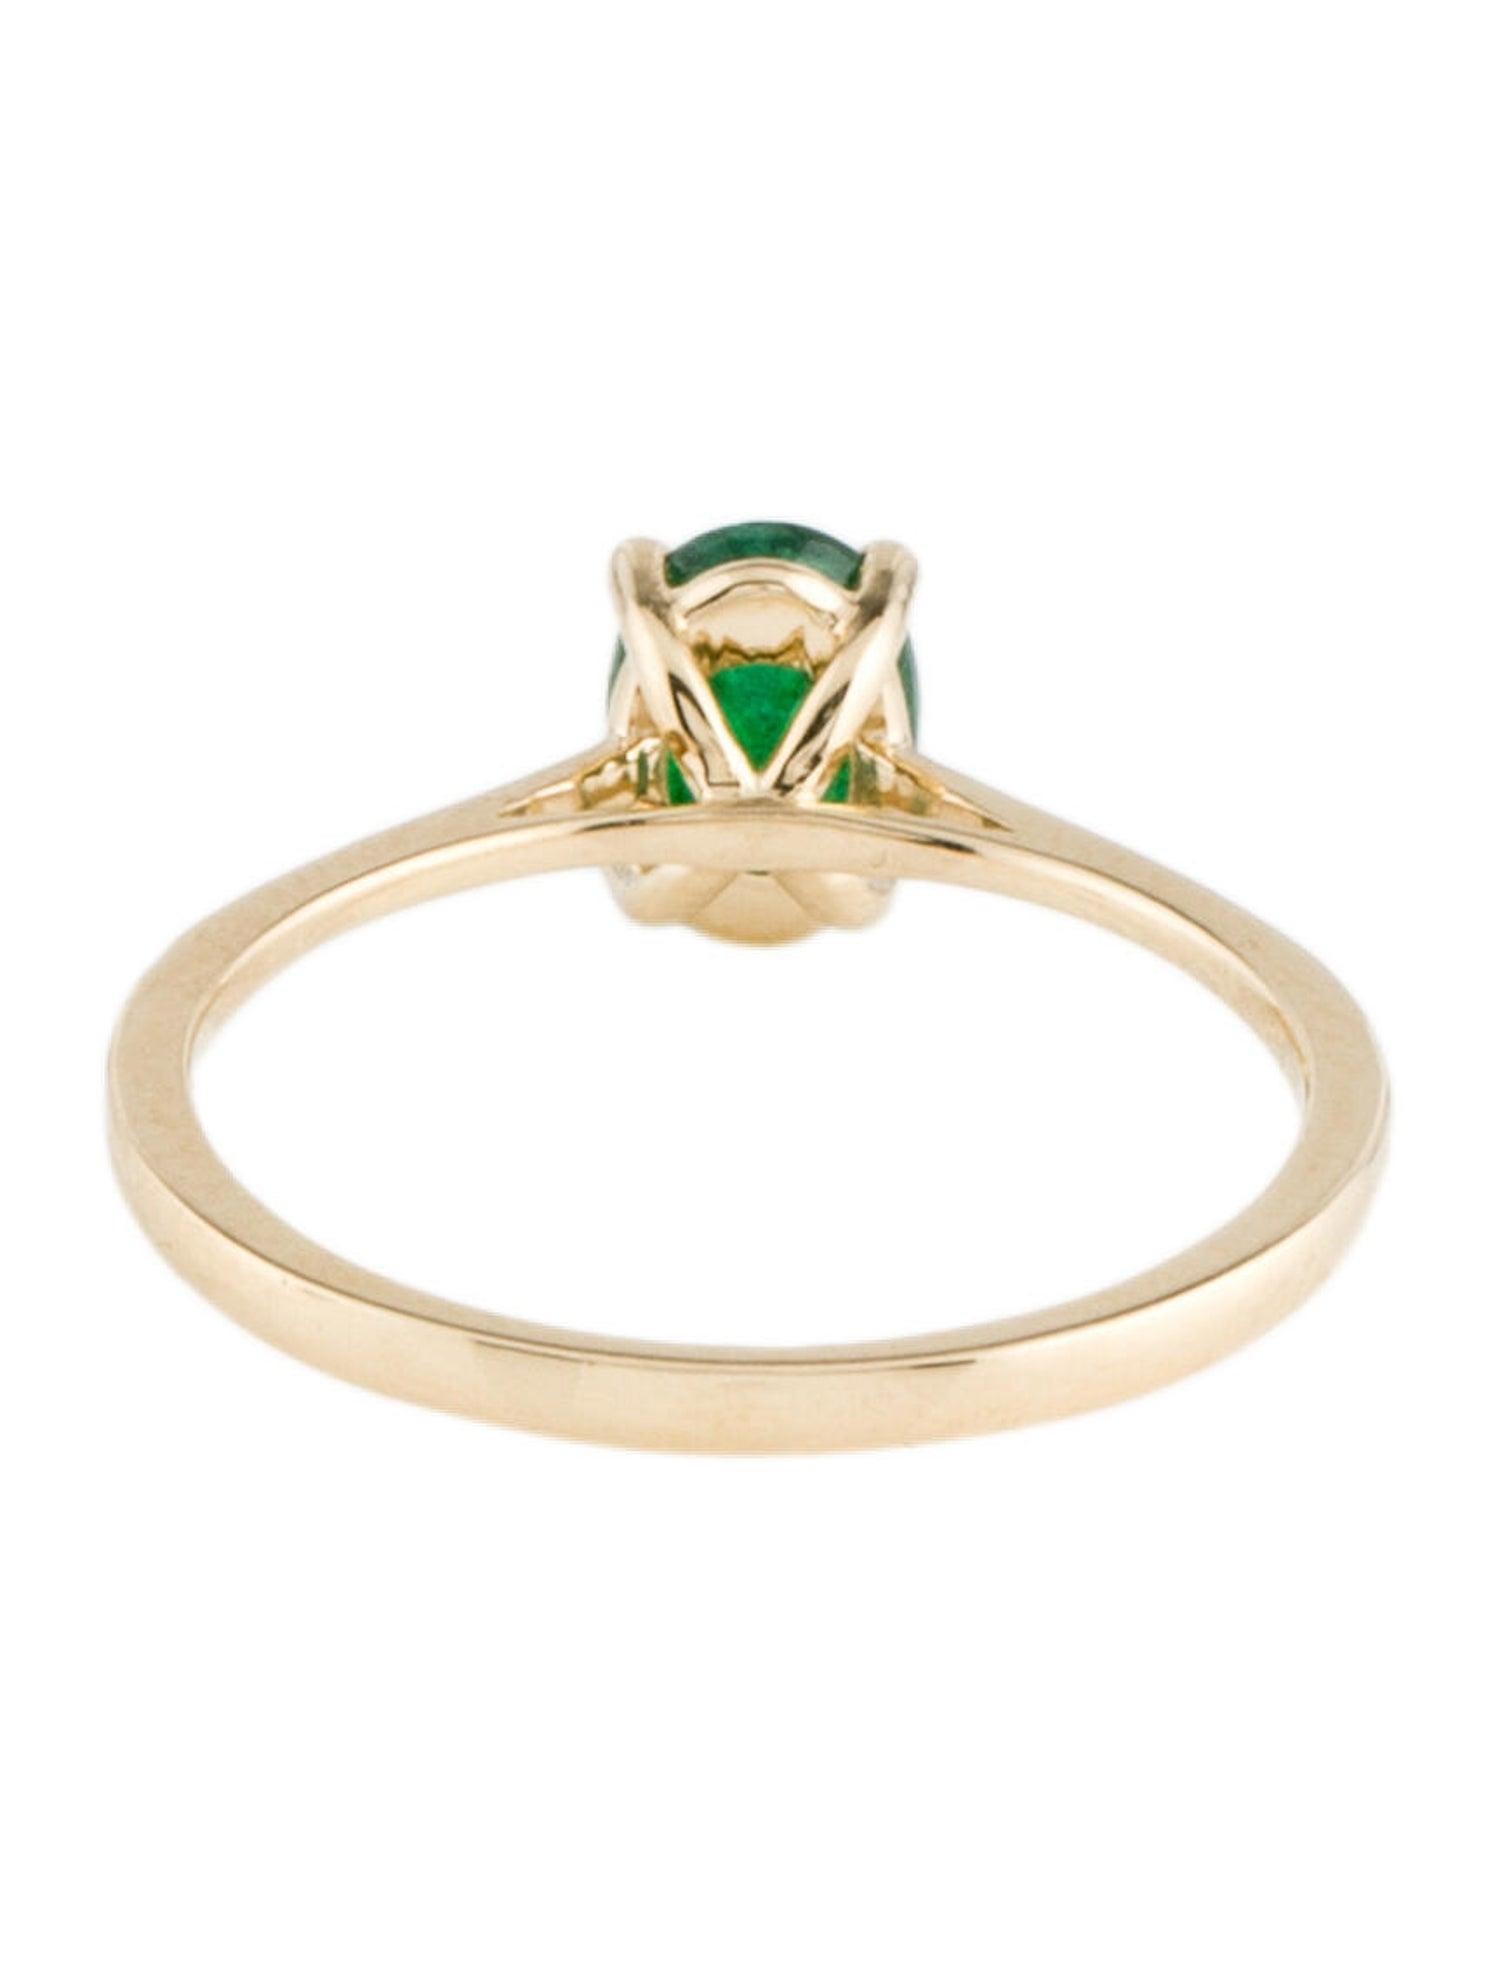 Taille brillant 14K Emerald Cocktail Ring - Size 7 - Timeless Elegance & Luxury Statement Piece en vente